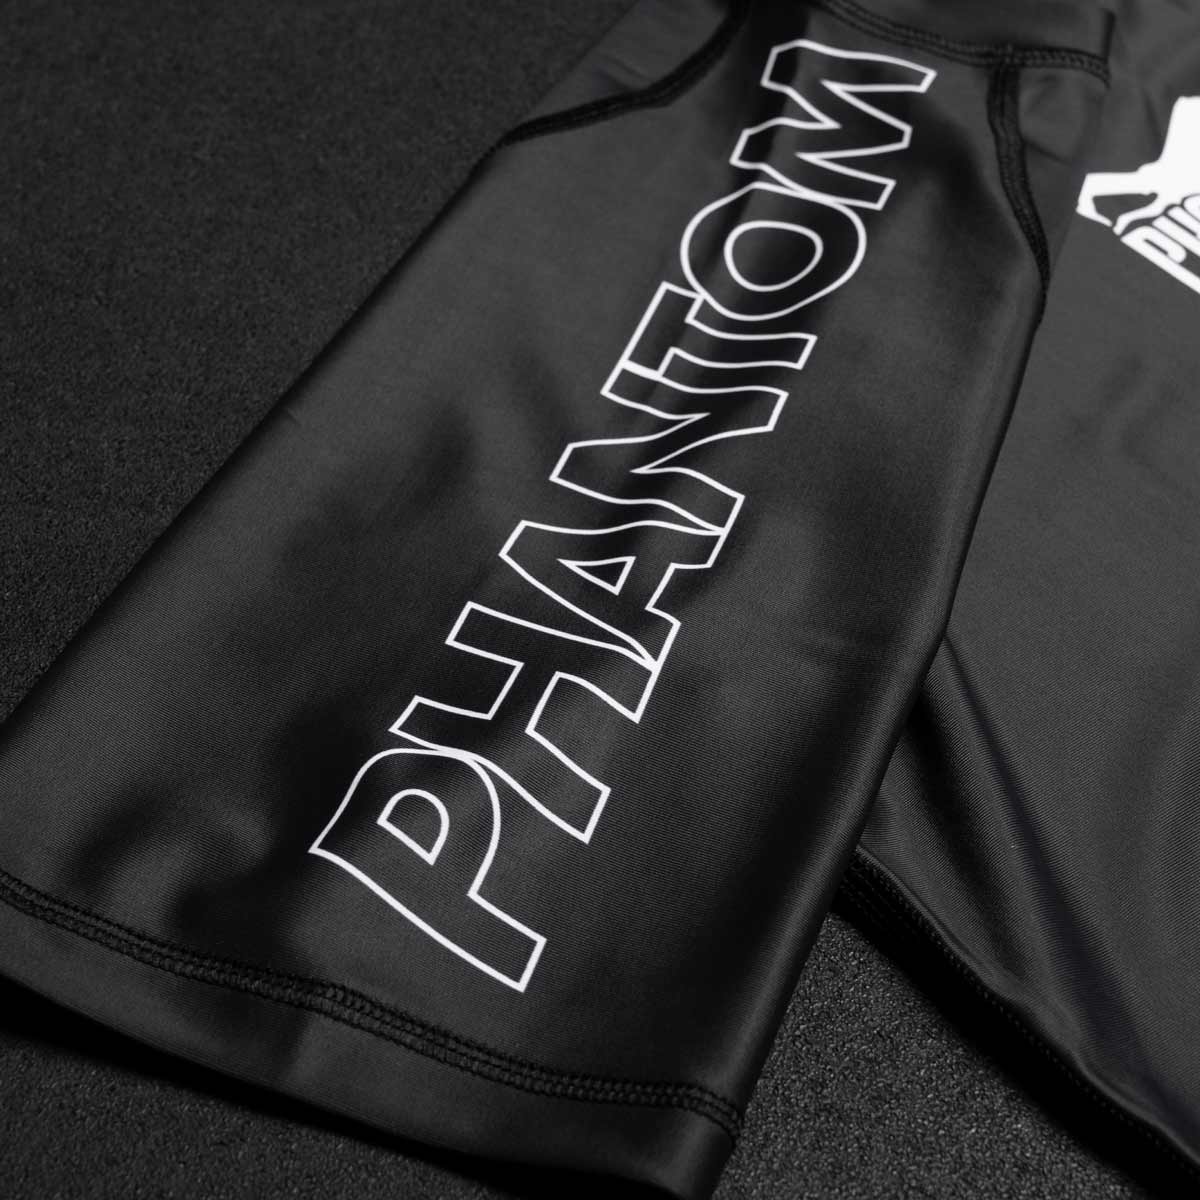 Phantom Ranked No-Gi Rashguard nach IBJJF Richtlinien in Schwarz. Ideal für BJJ und Jiu Jitsu Training und Wettkampf.